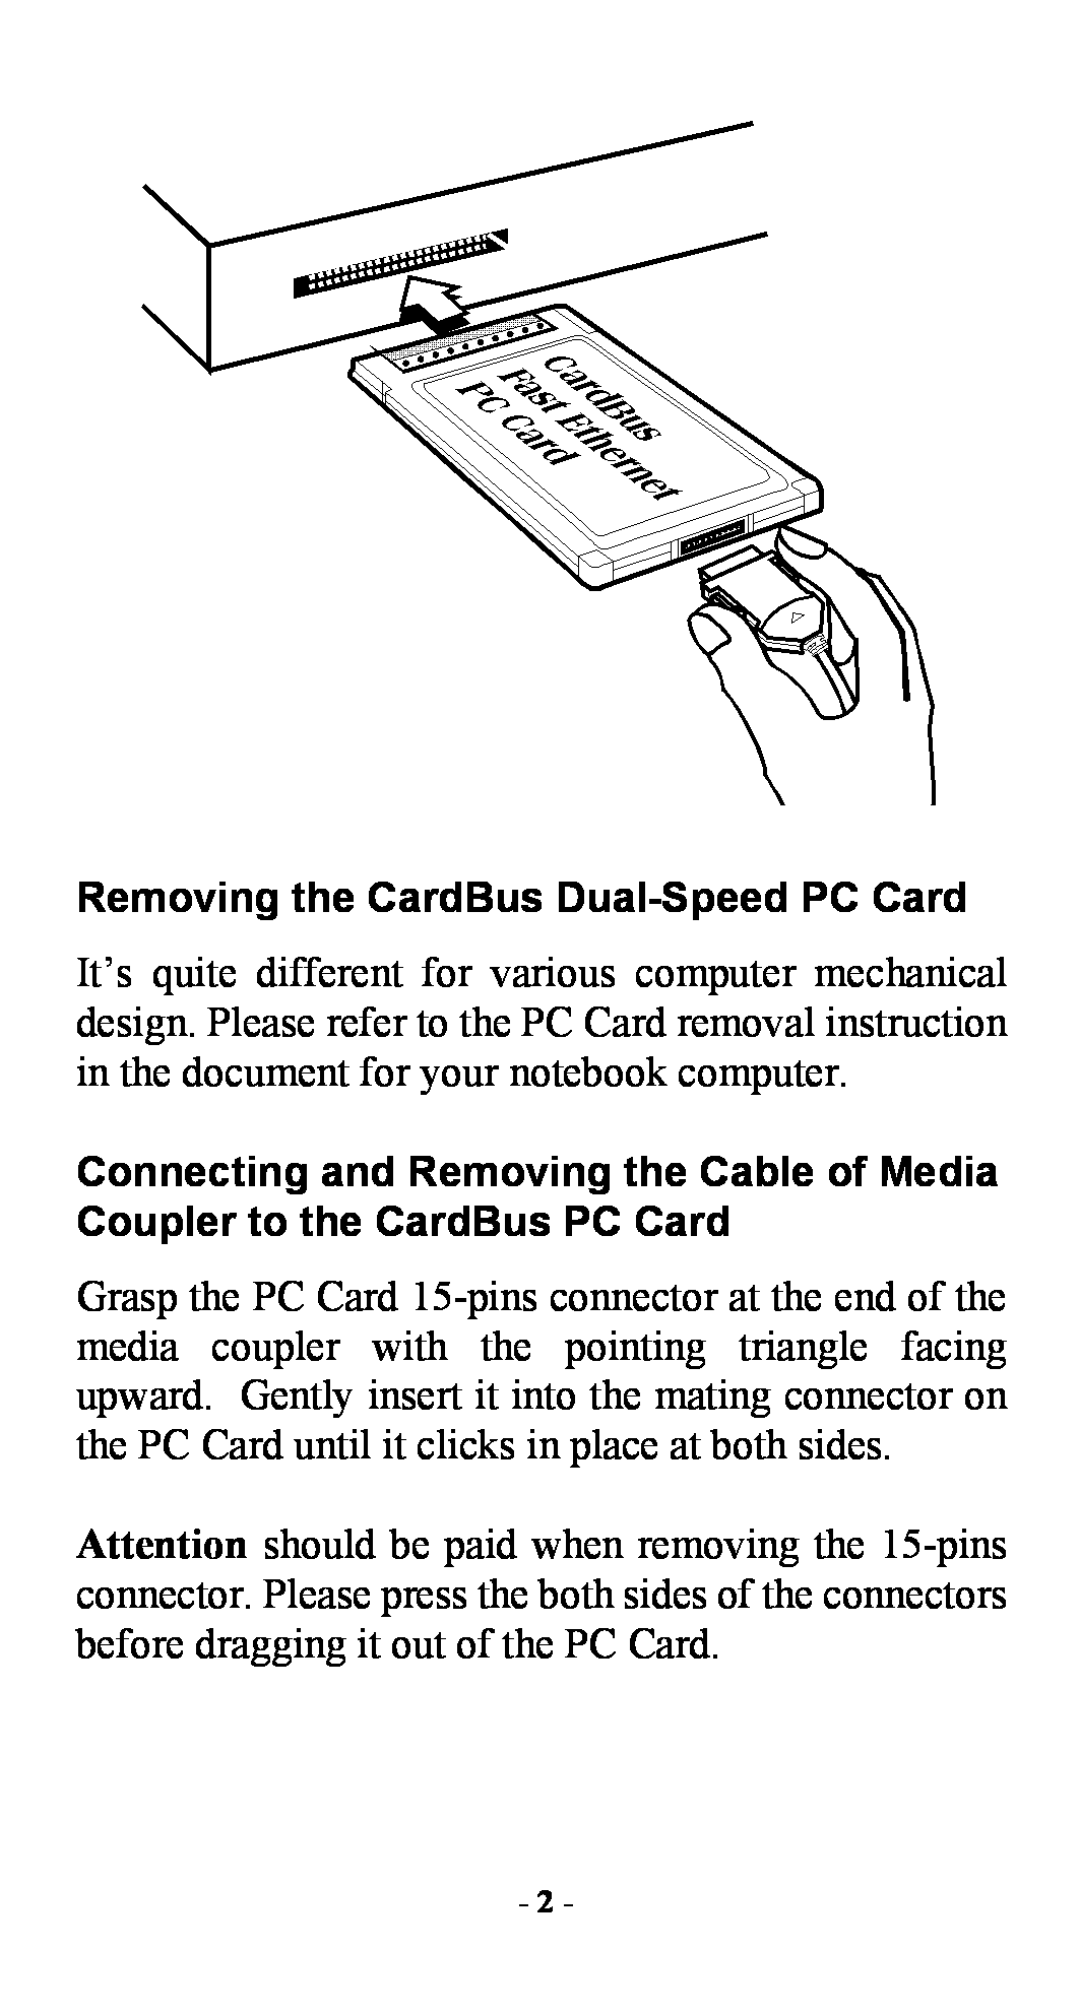 Abocom FE2000 manual Removing the CardBus Dual-Speed PC Card 